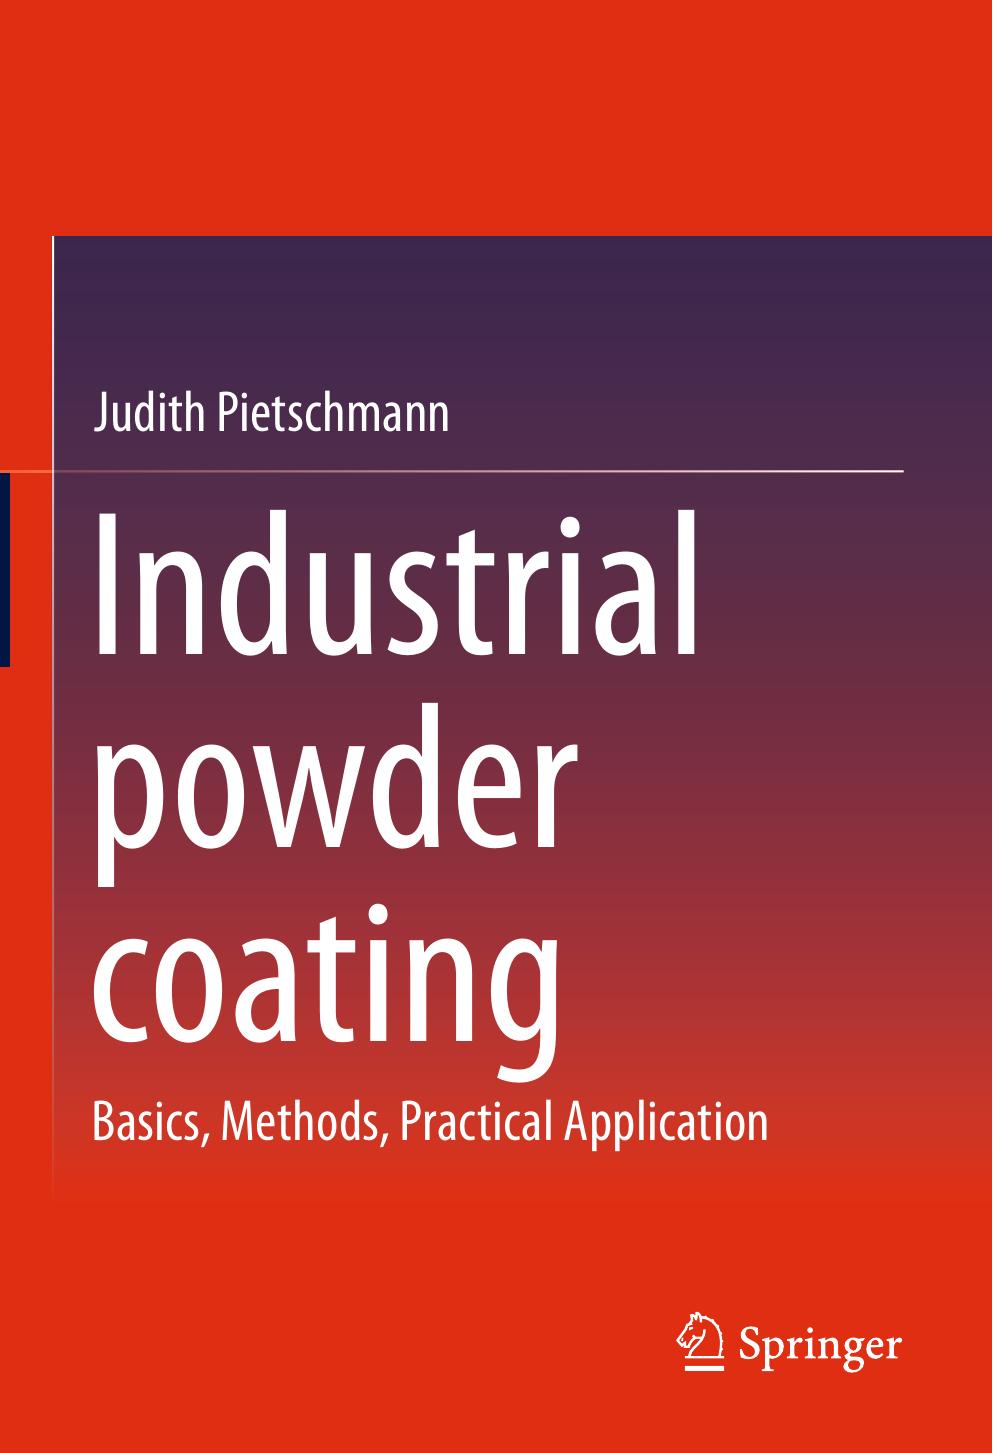 Industrial powder coating: Basics, Methods, Practical Application by Judith Pietschmann